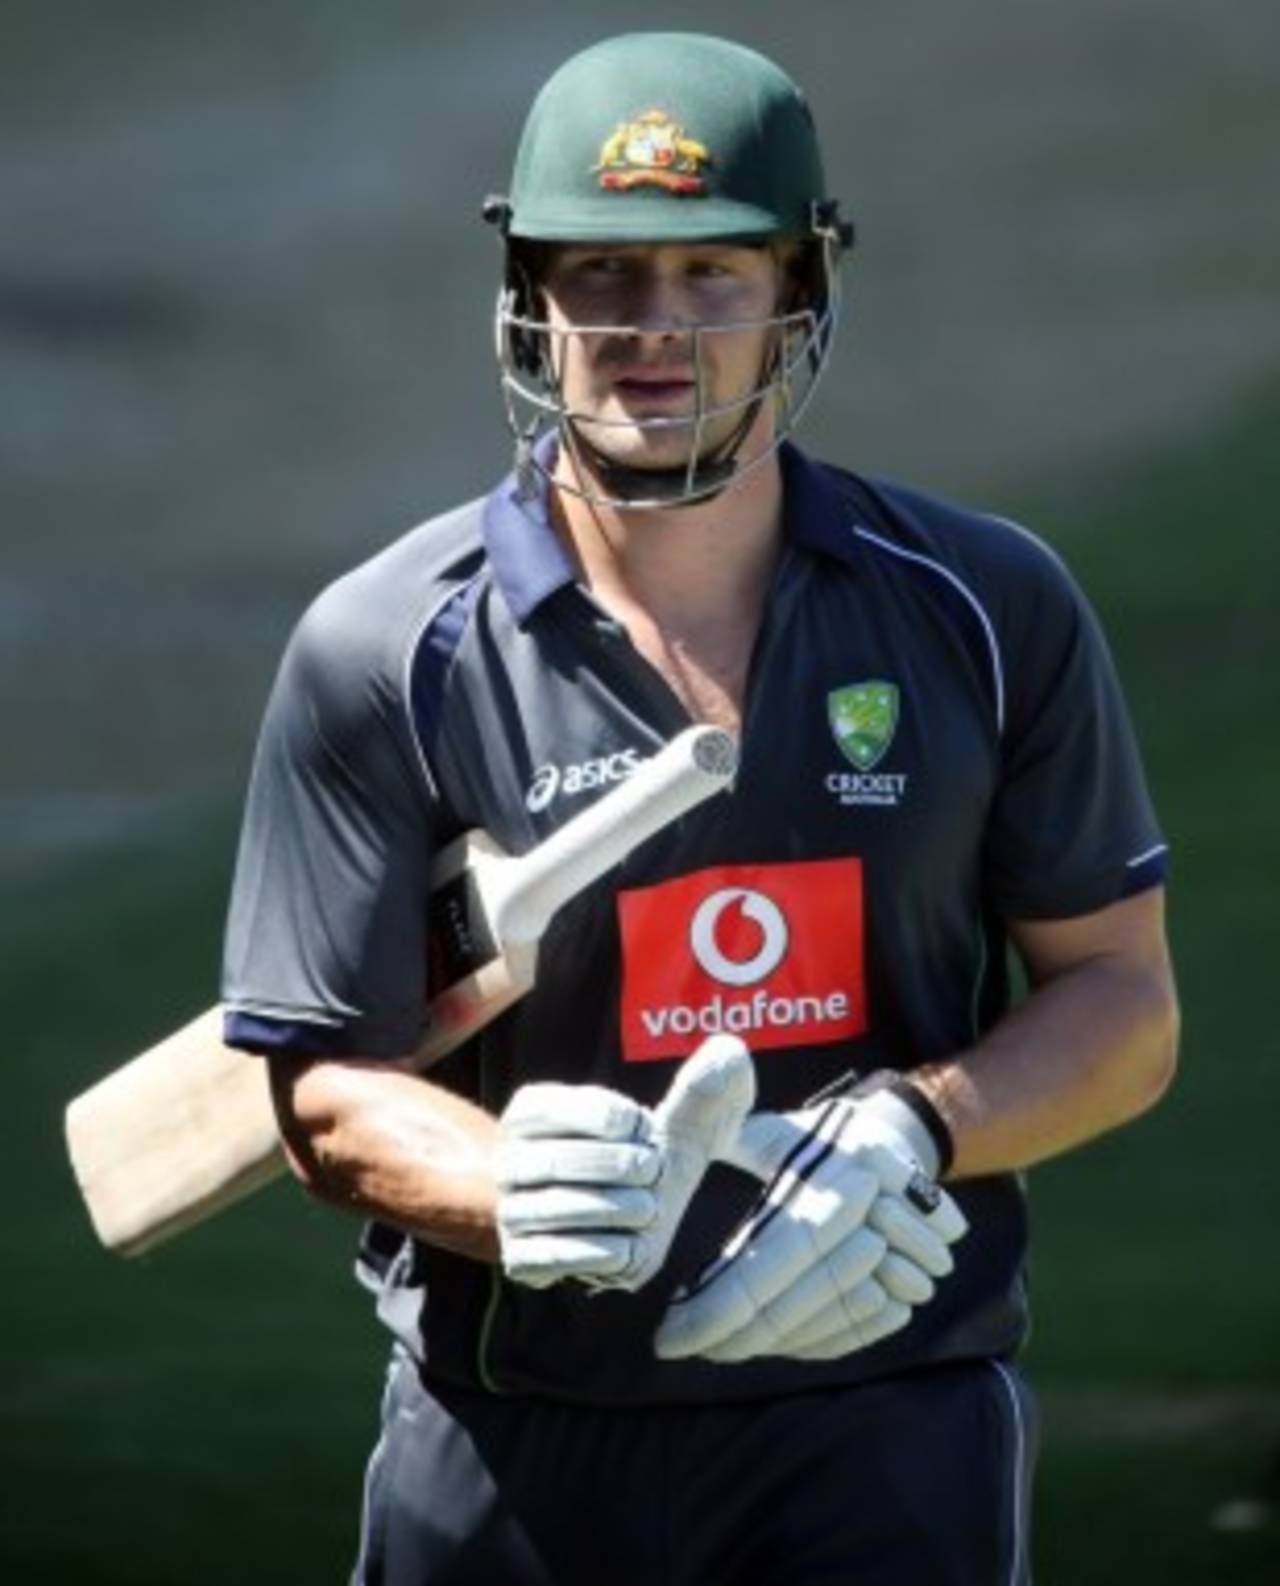 Shane Watson at Australia's training session, Adelaide, November 19, 2012